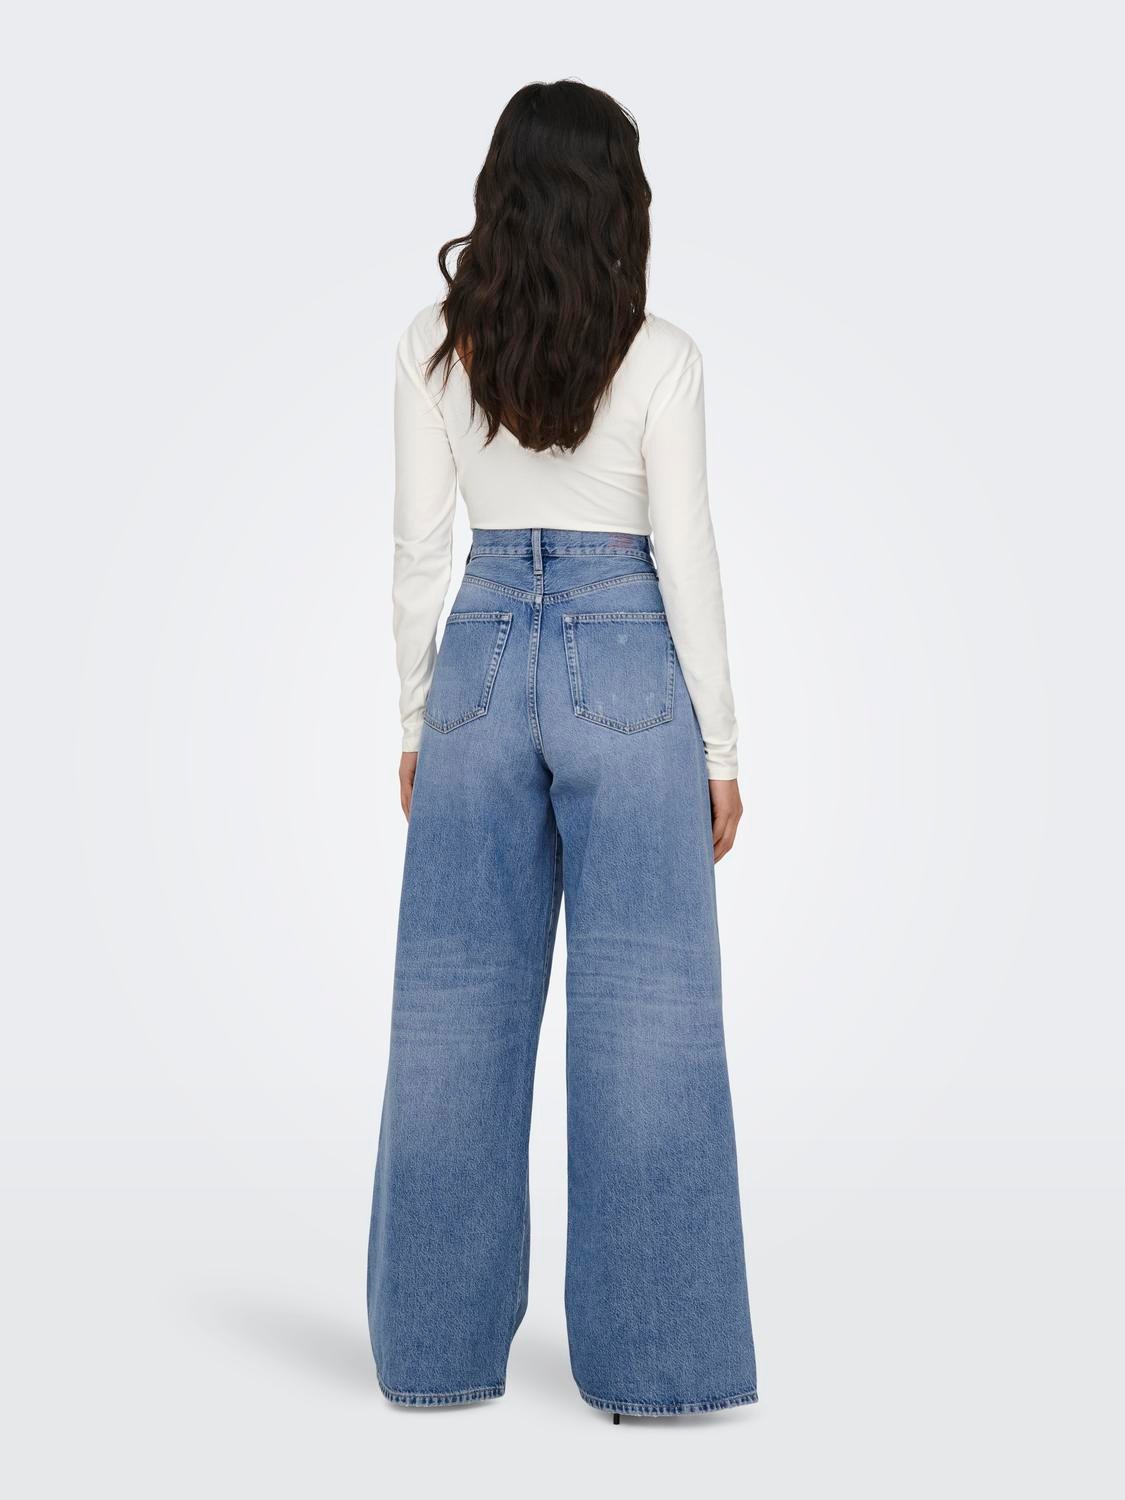 1826 Blue/Black Denim Jeans HIGH Waist Womens Plus Size Pants Skinny Leg  PL-882 (16, Midnight Blue) at  Women's Jeans store